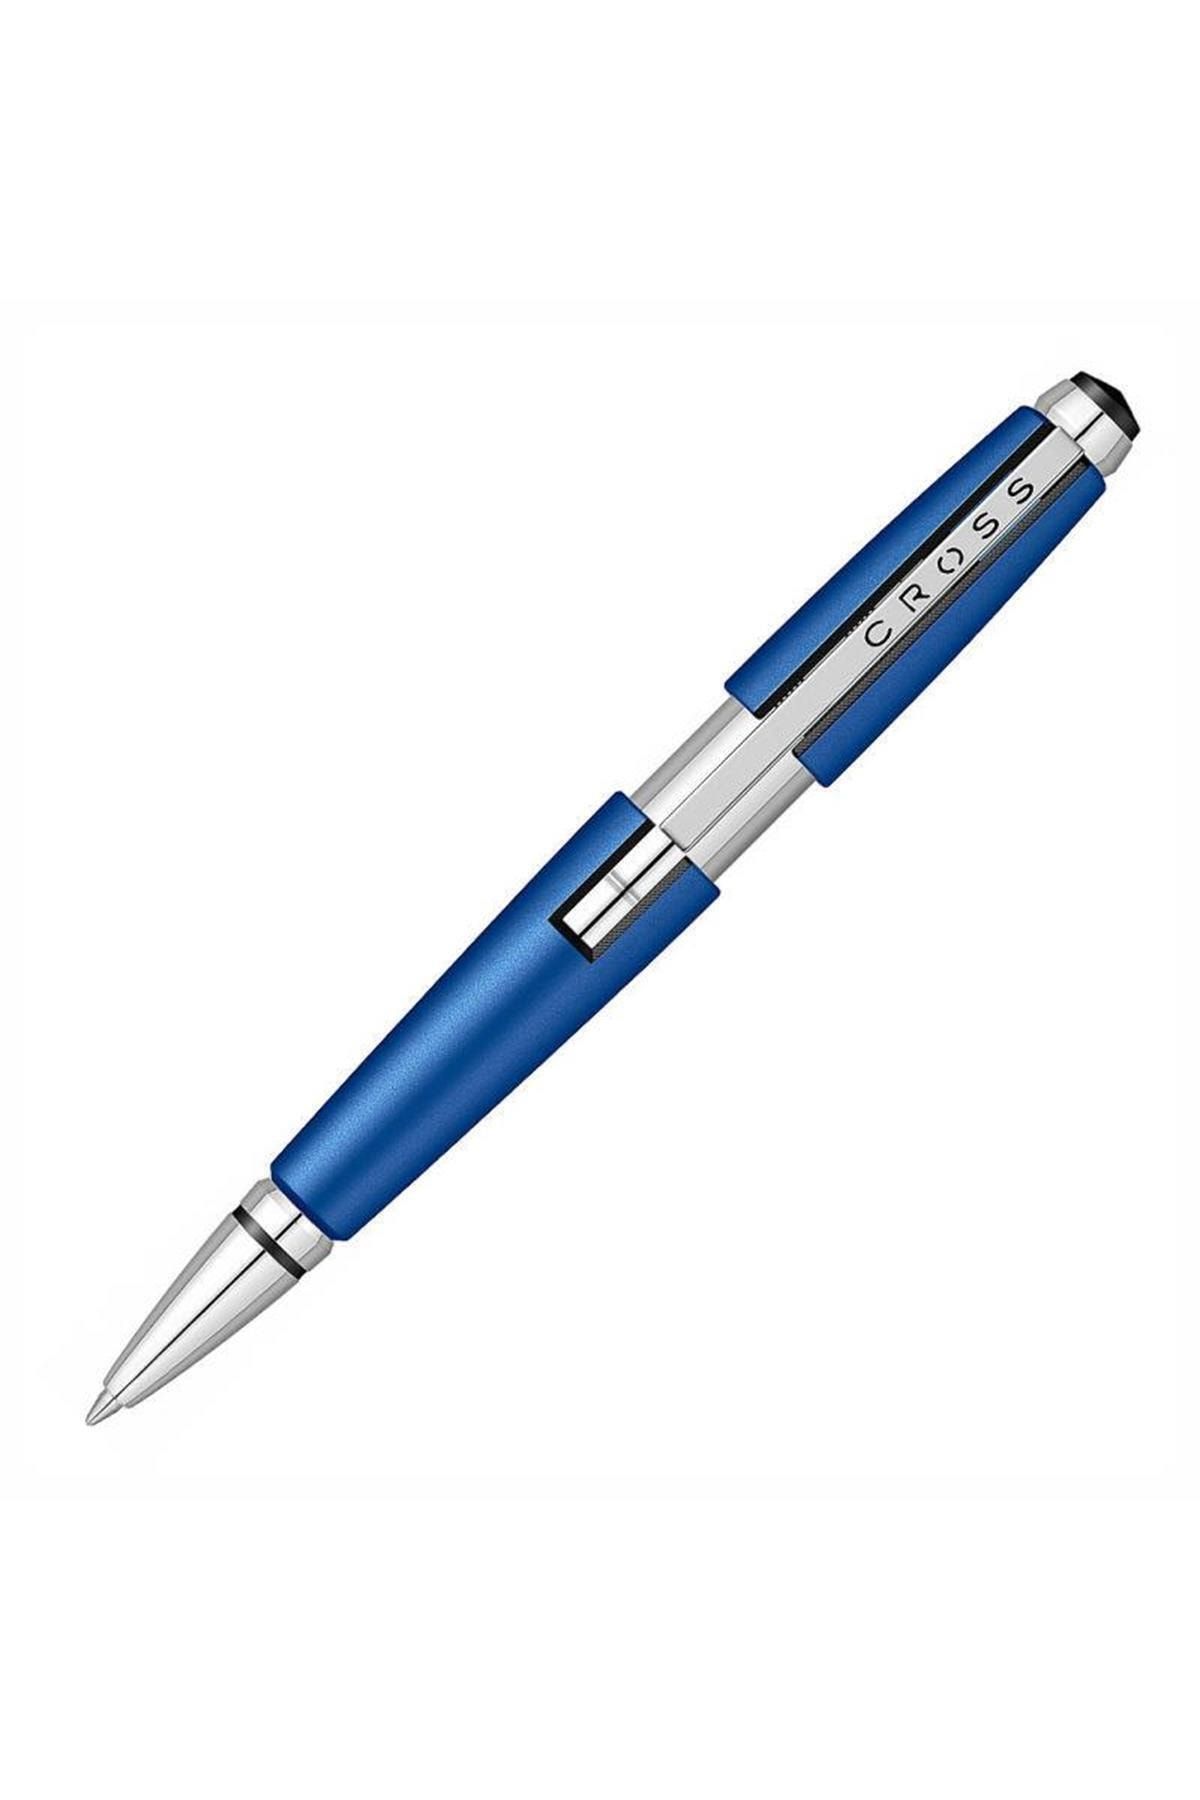 Cross Marka: At0555-3 Edge Mavi/krom Roller Kalem Kategori: Kurşun Kalemler